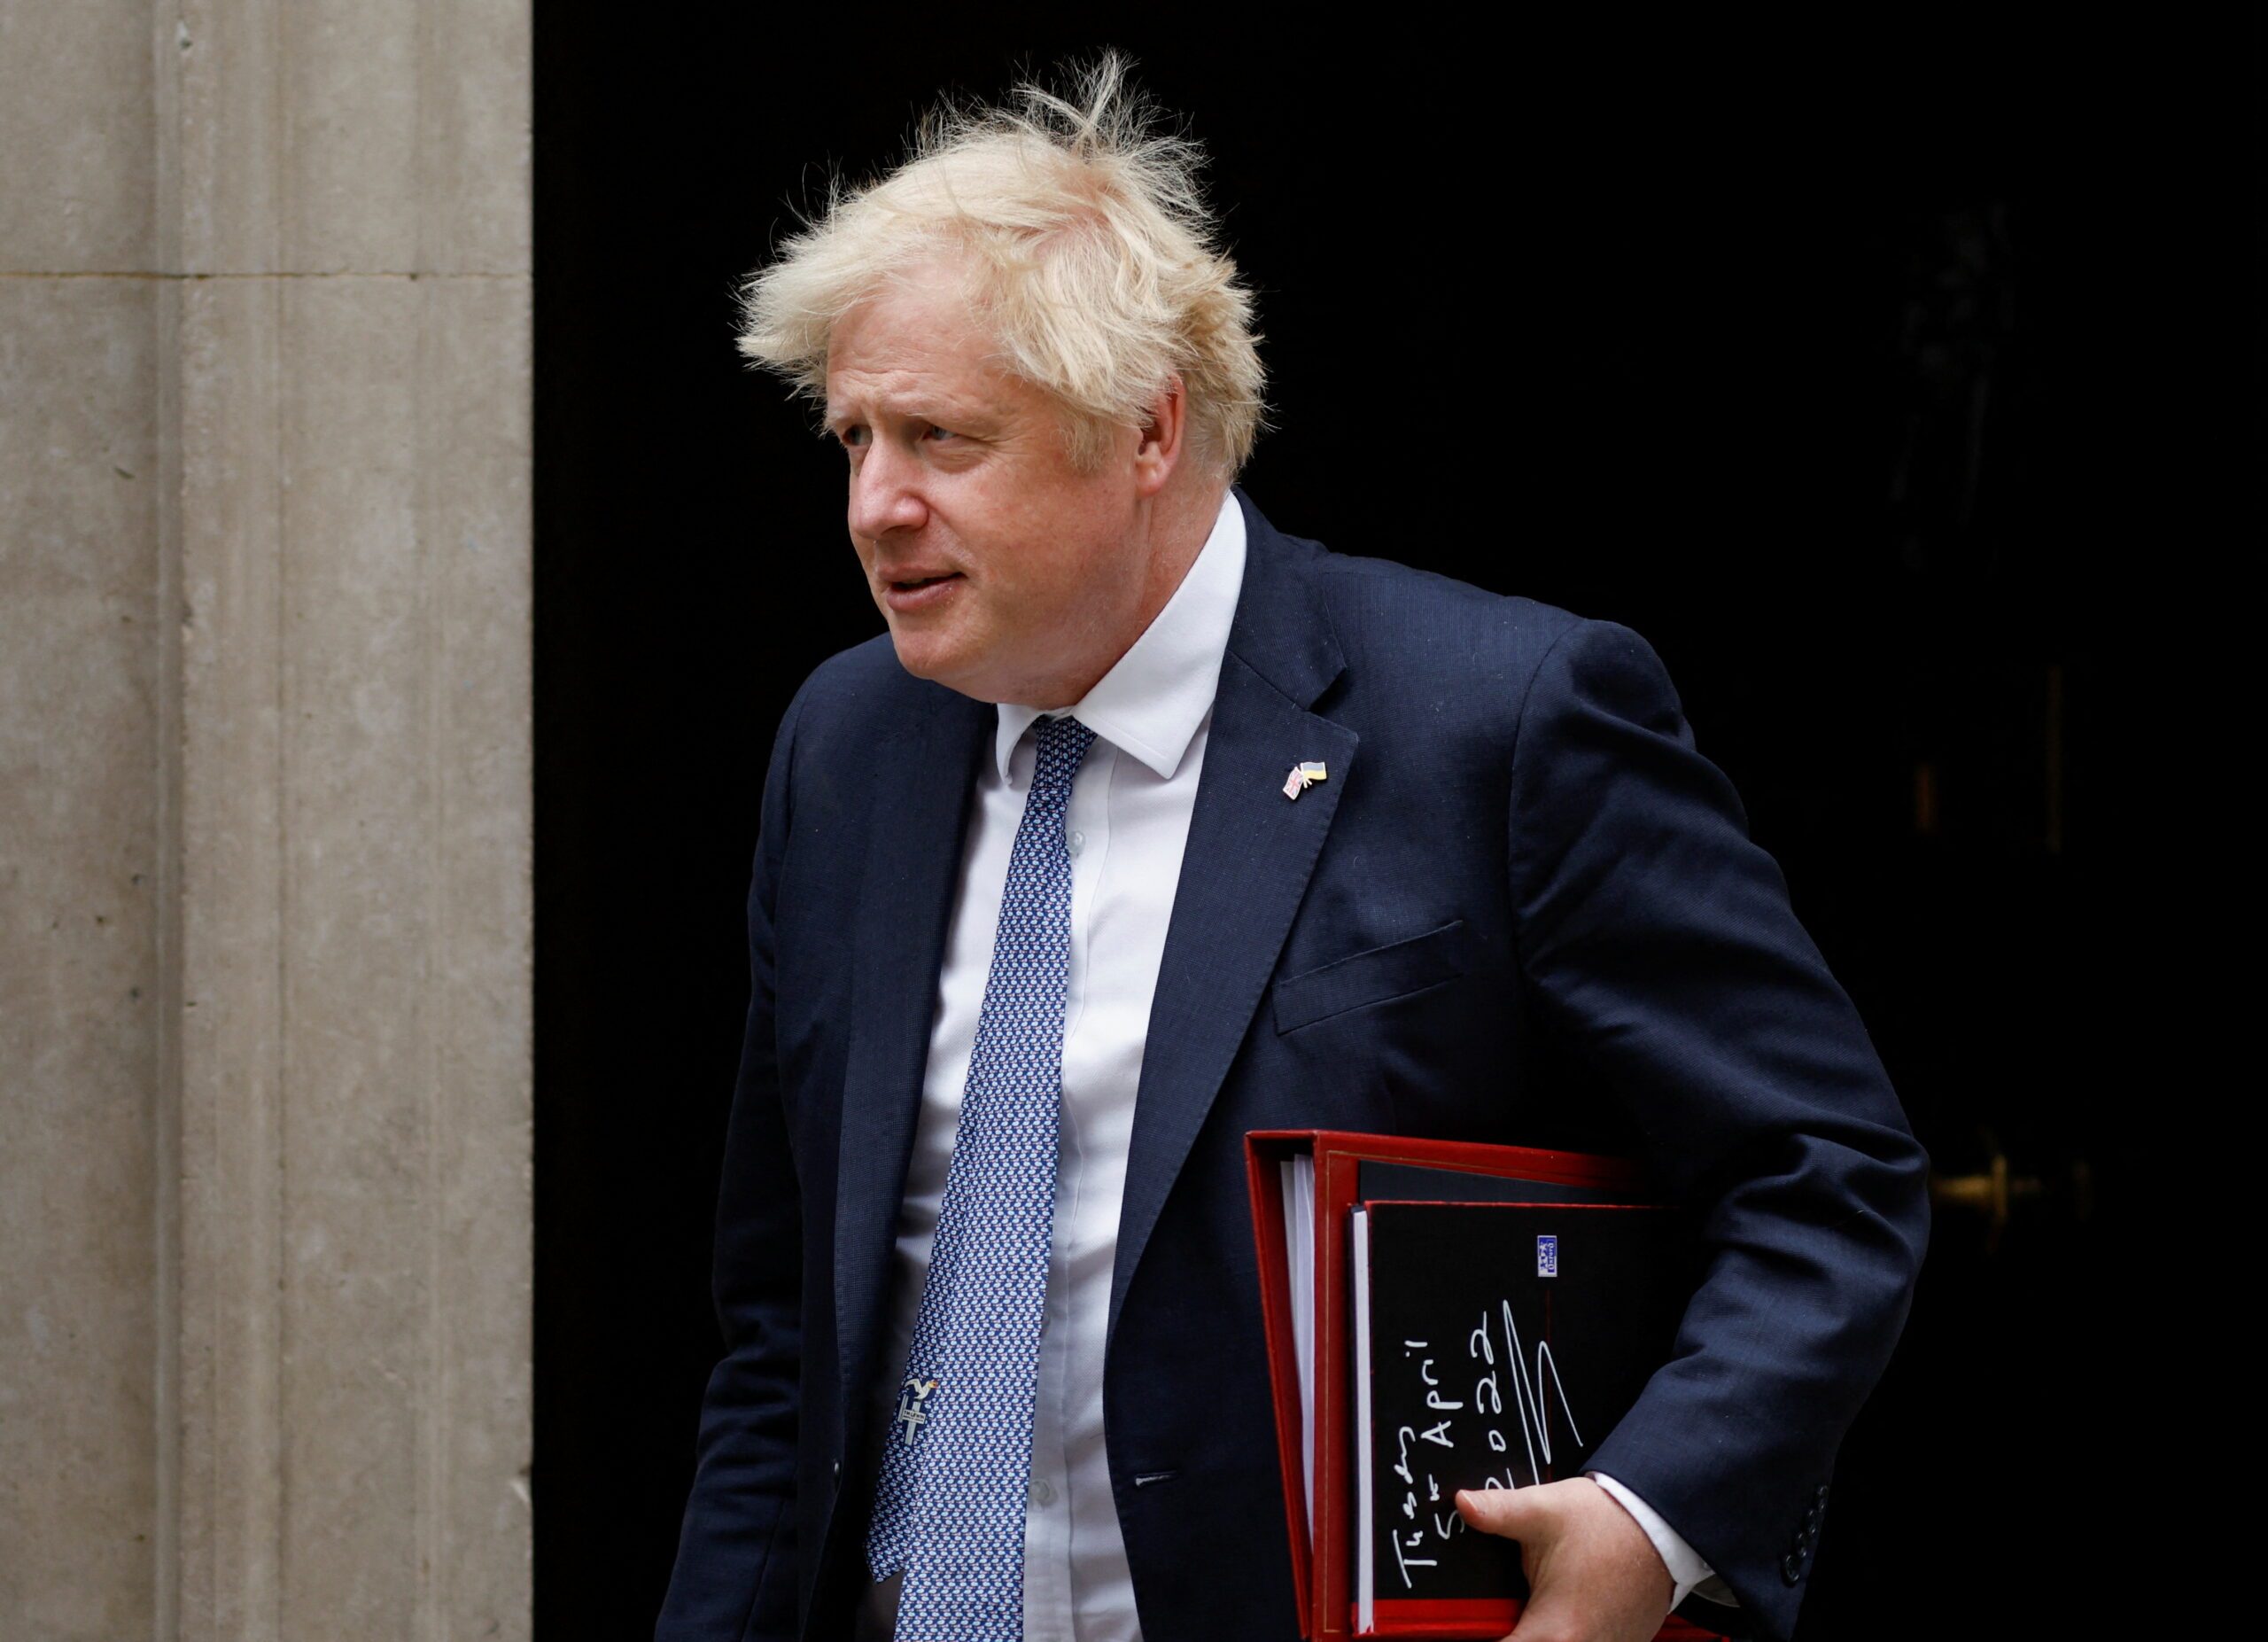 UK’s Boris Johnson faces new threat of confidence vote over lockdown parties